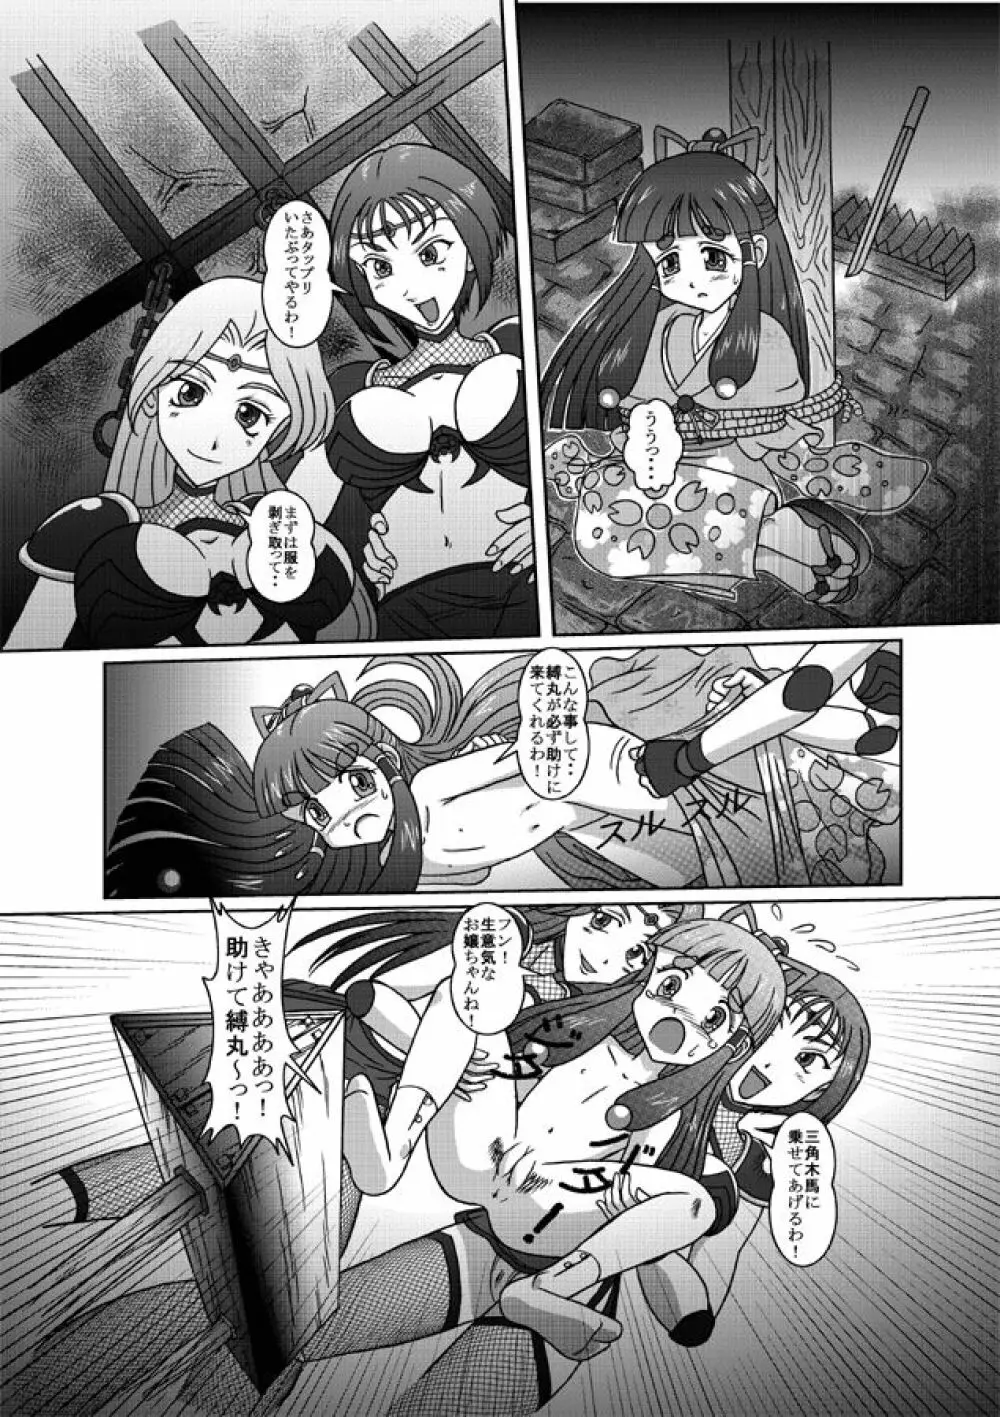 Same-themed manga about kid fighting female ninjas from japanese imageboard. 20ページ